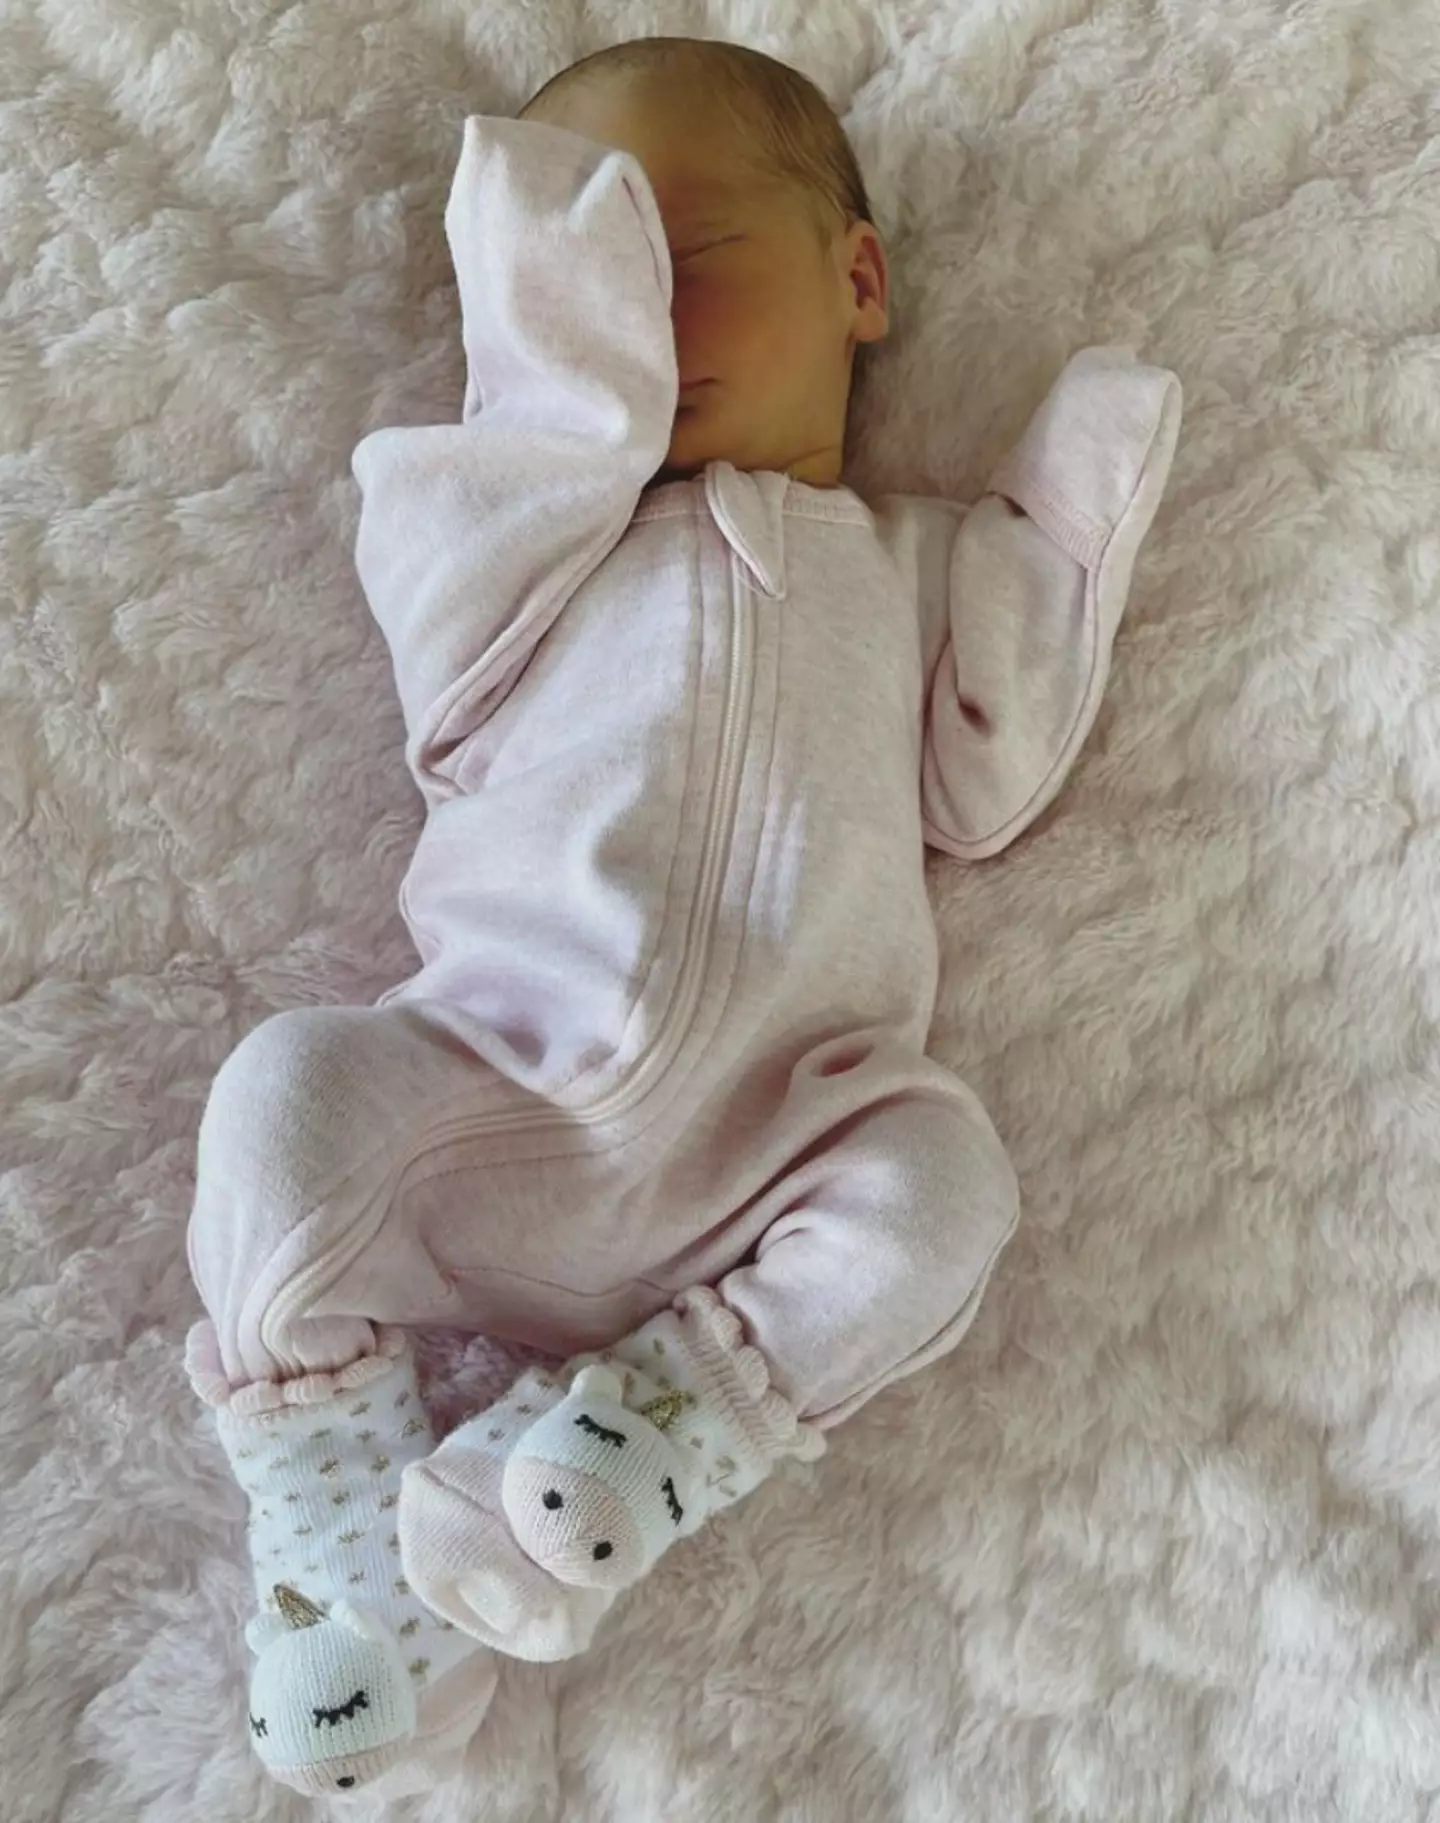 Rebel Wilson's baby girl Royce Lillian.